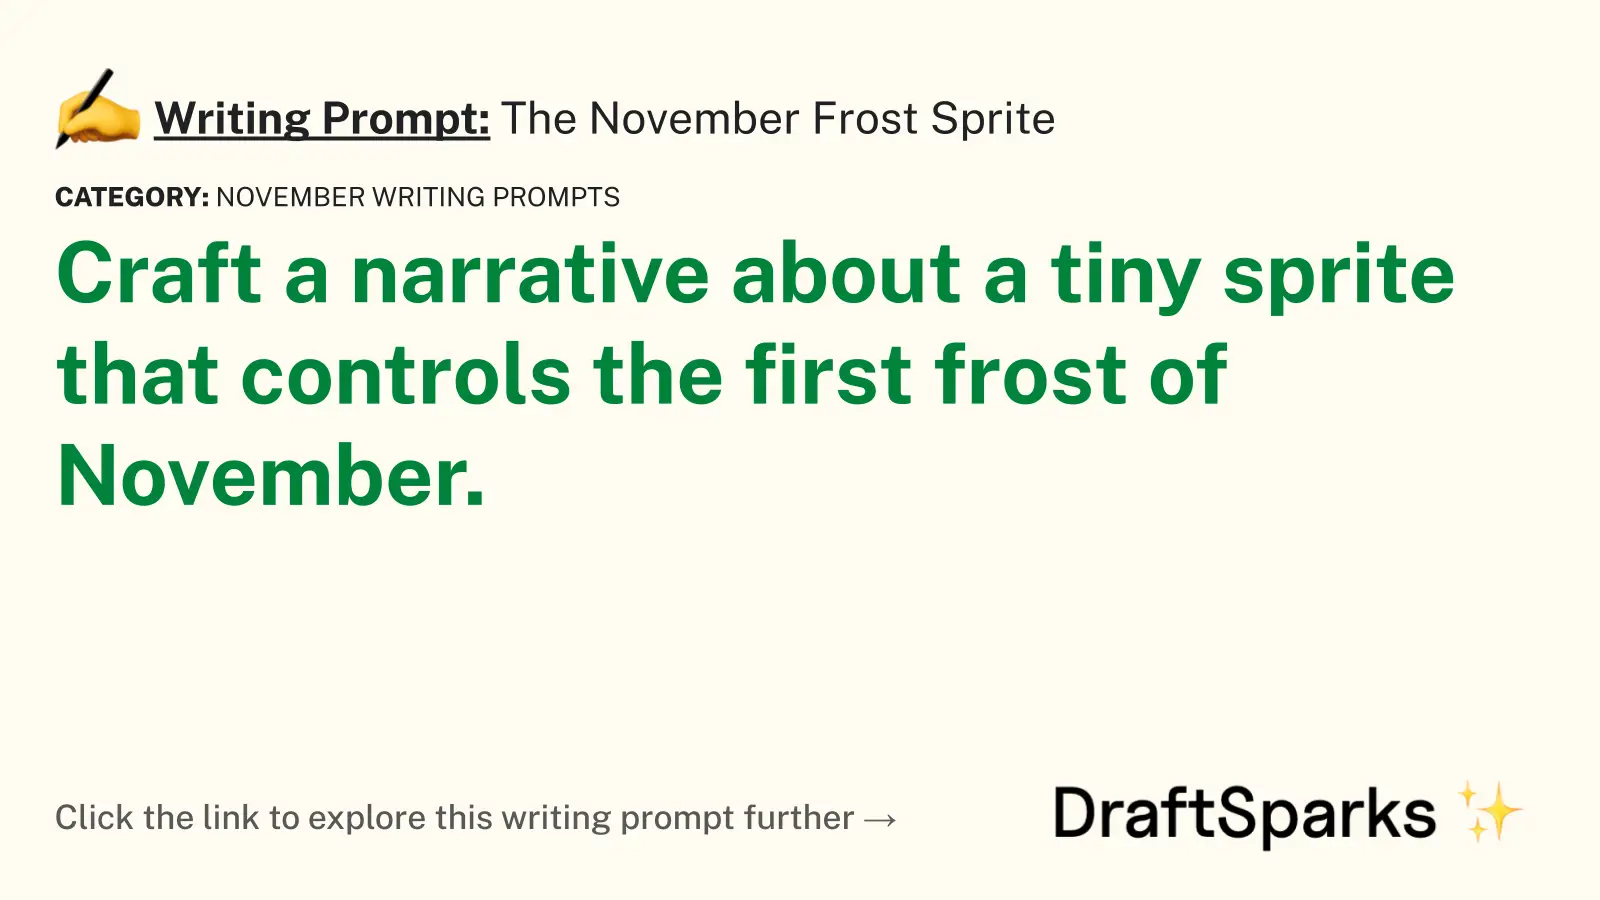 The November Frost Sprite